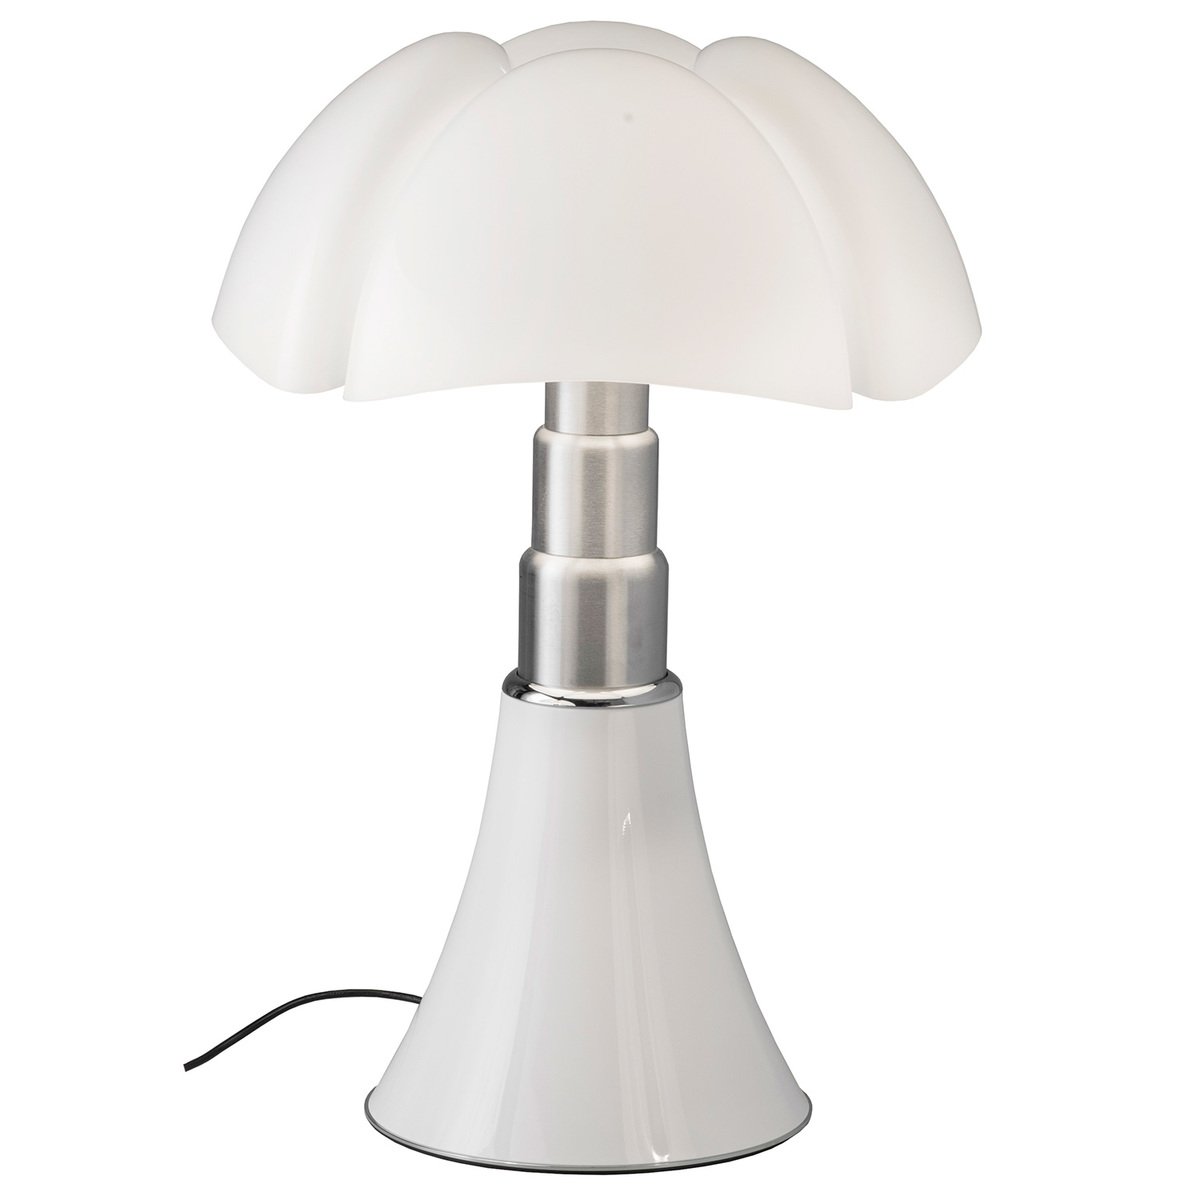 Mount Bank Verzoekschrift vreemd Martinelli Luce Pipistrello table lamp, white | Finnish Design Shop